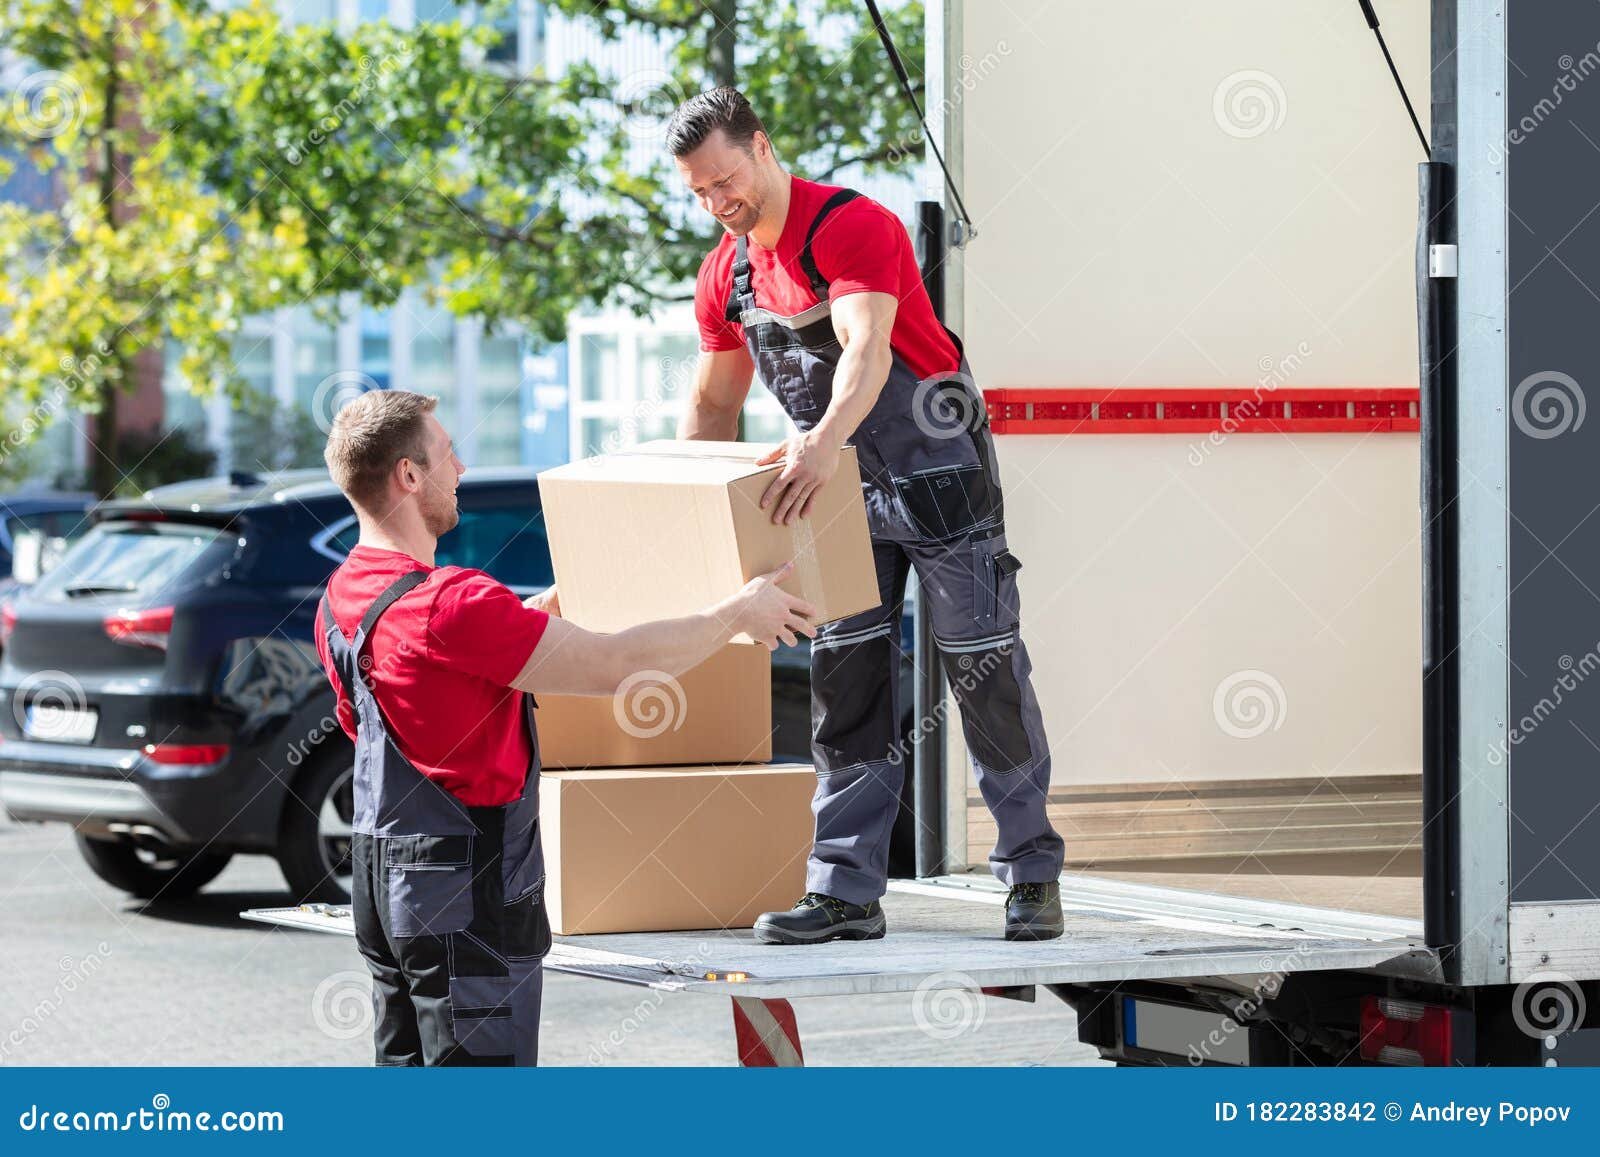 dos hombres cargando cajas en camion